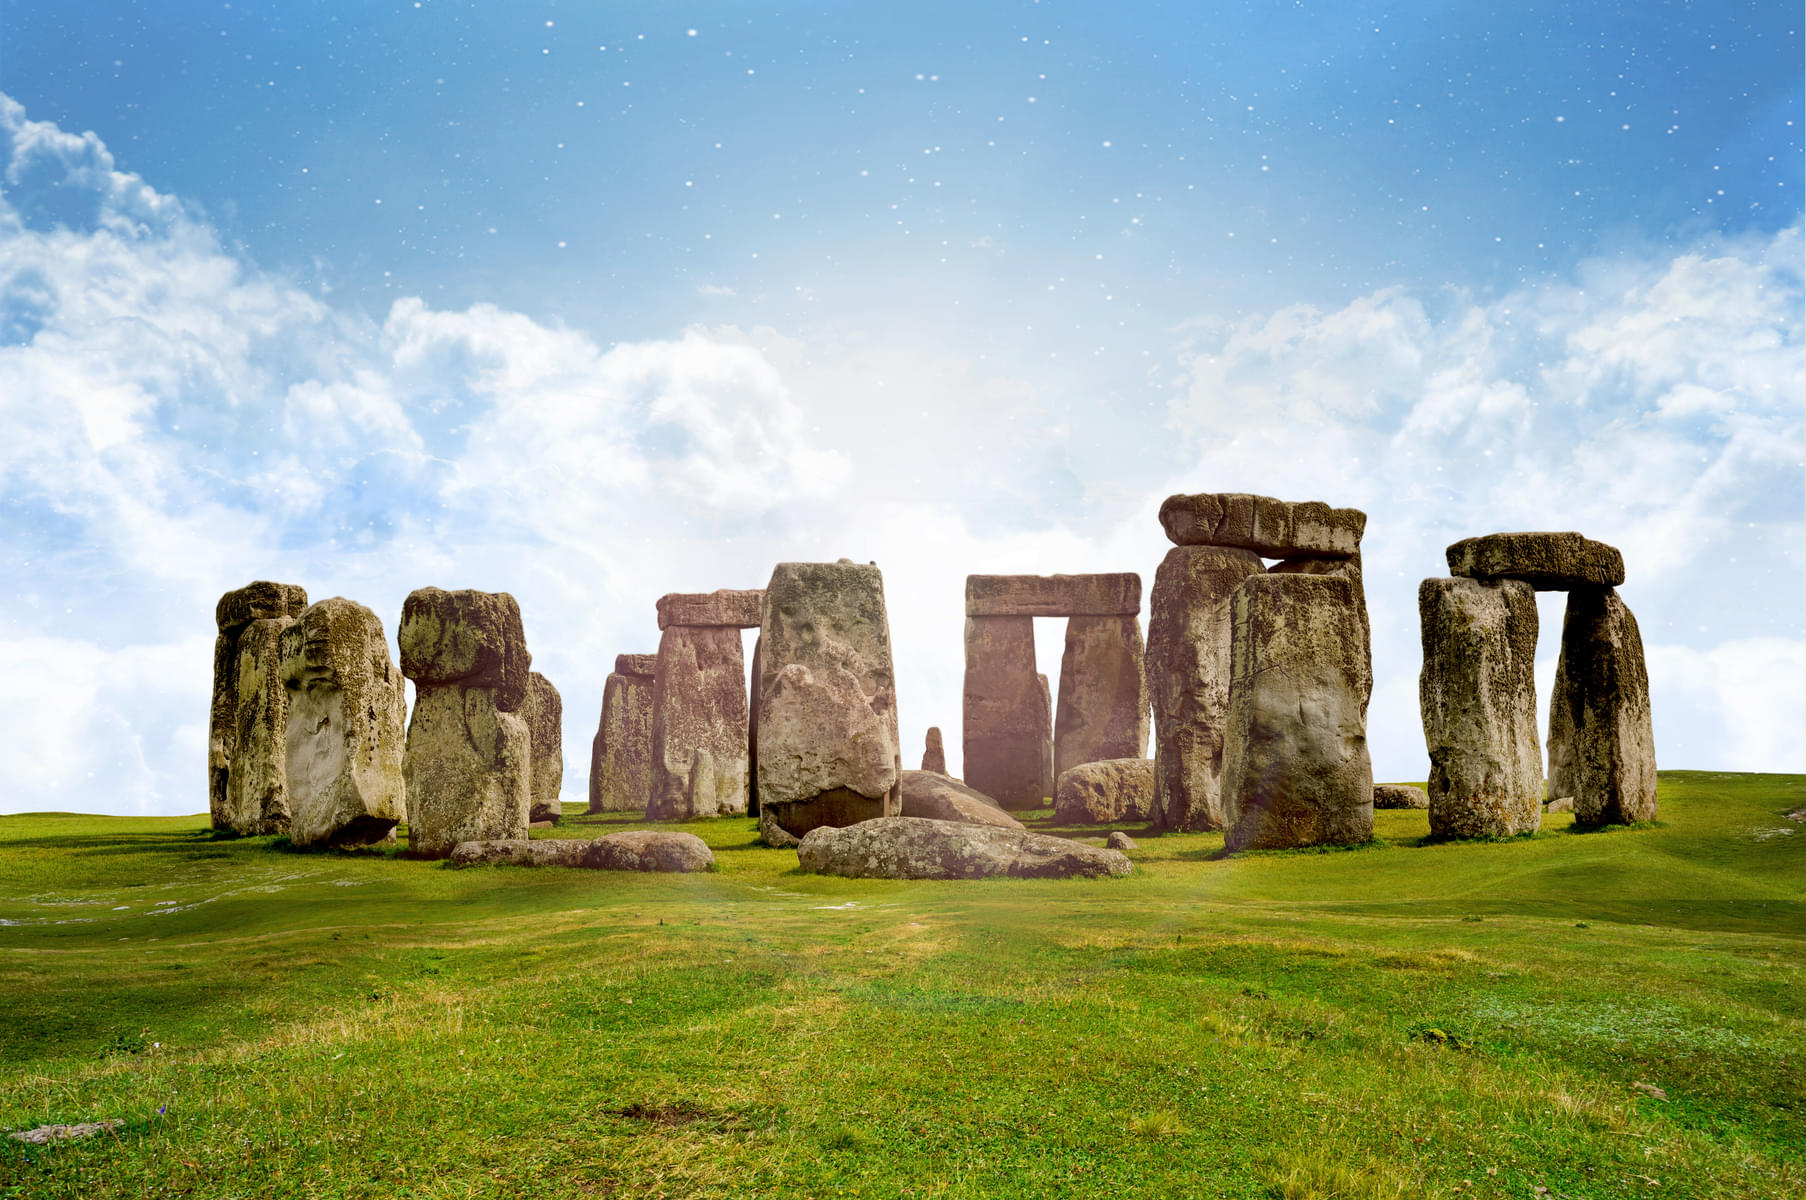 See the marvelous standing stones of Stonehenge